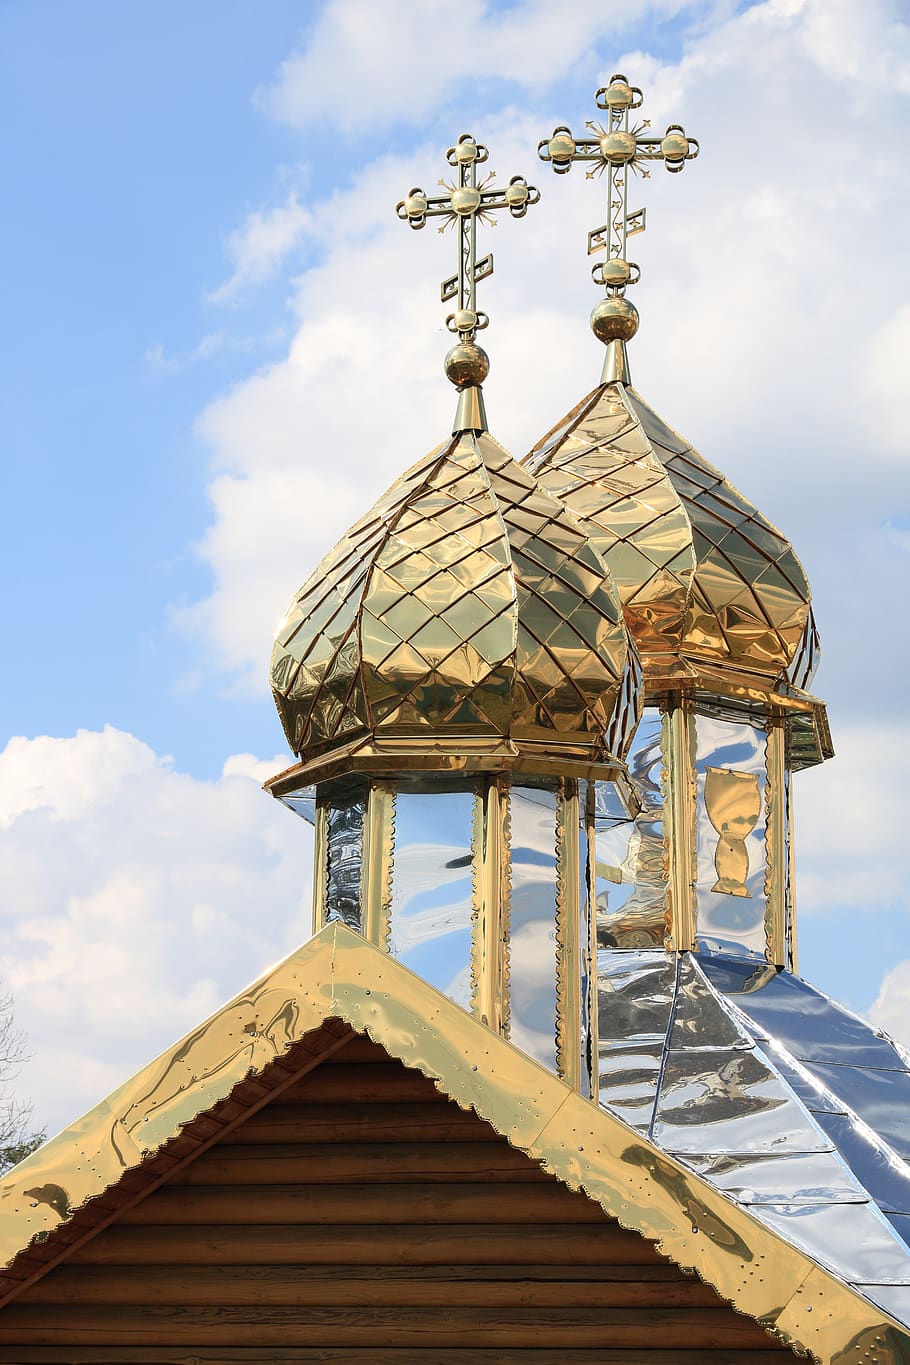 Image: Ukrainian church domes via CC0